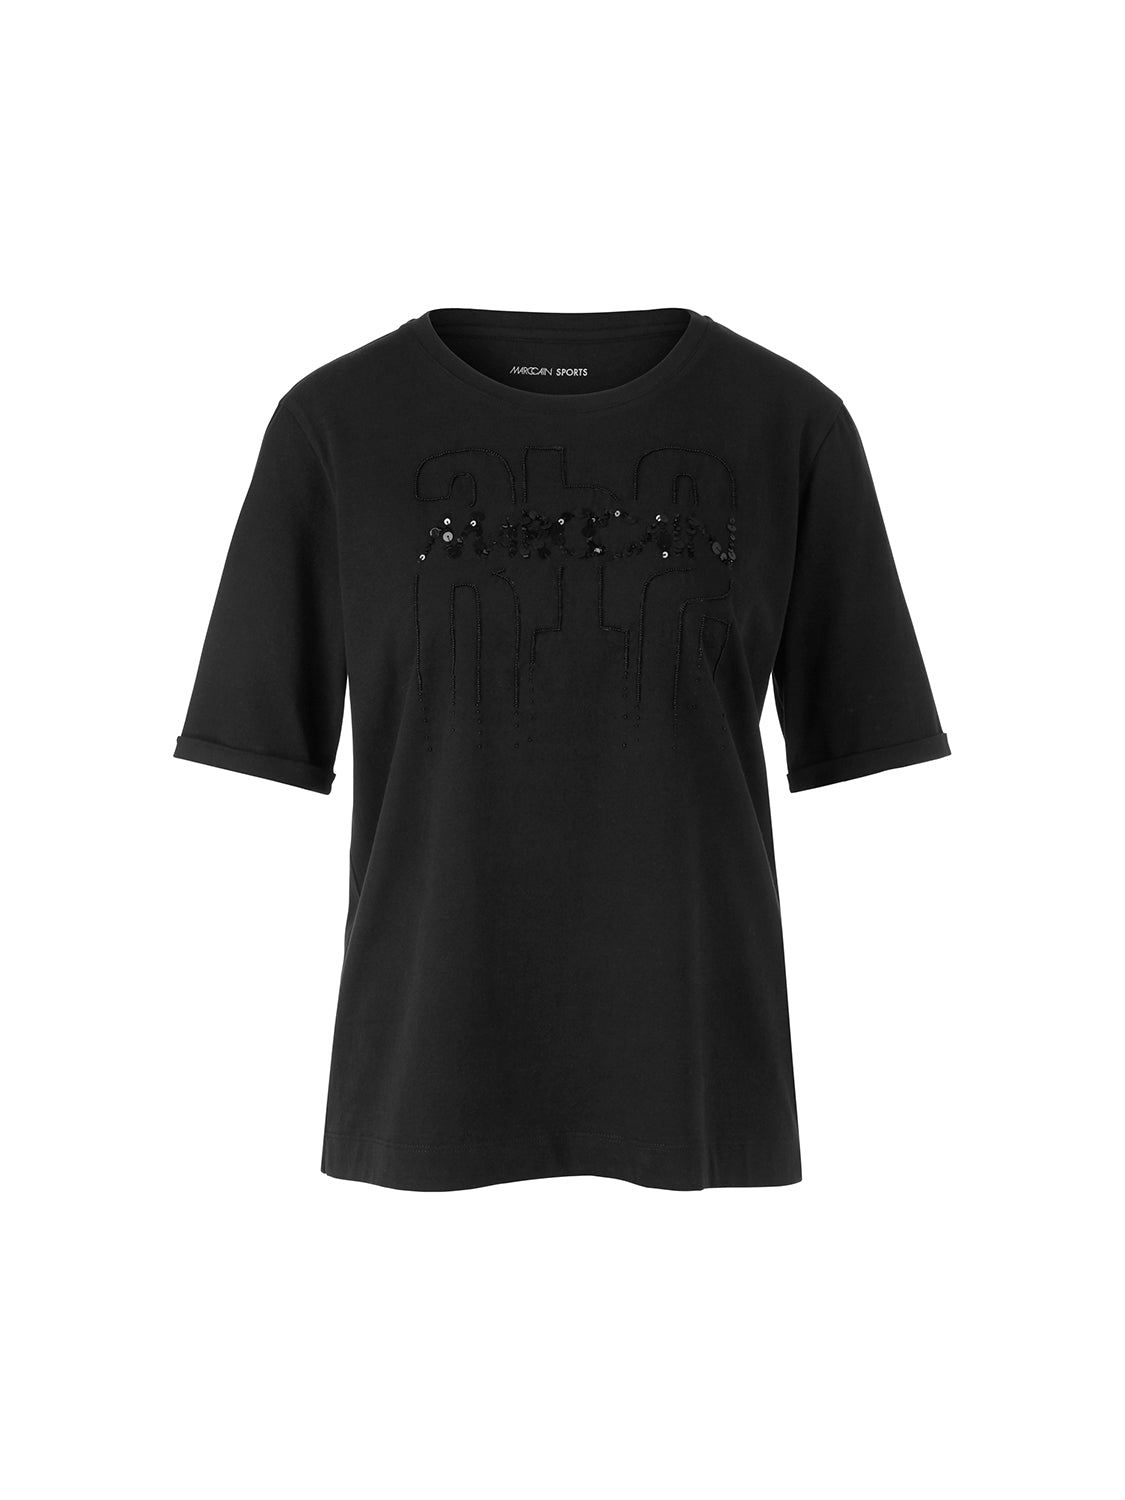 MarcCain T-shirt with Appliqué VS 48.08 J69